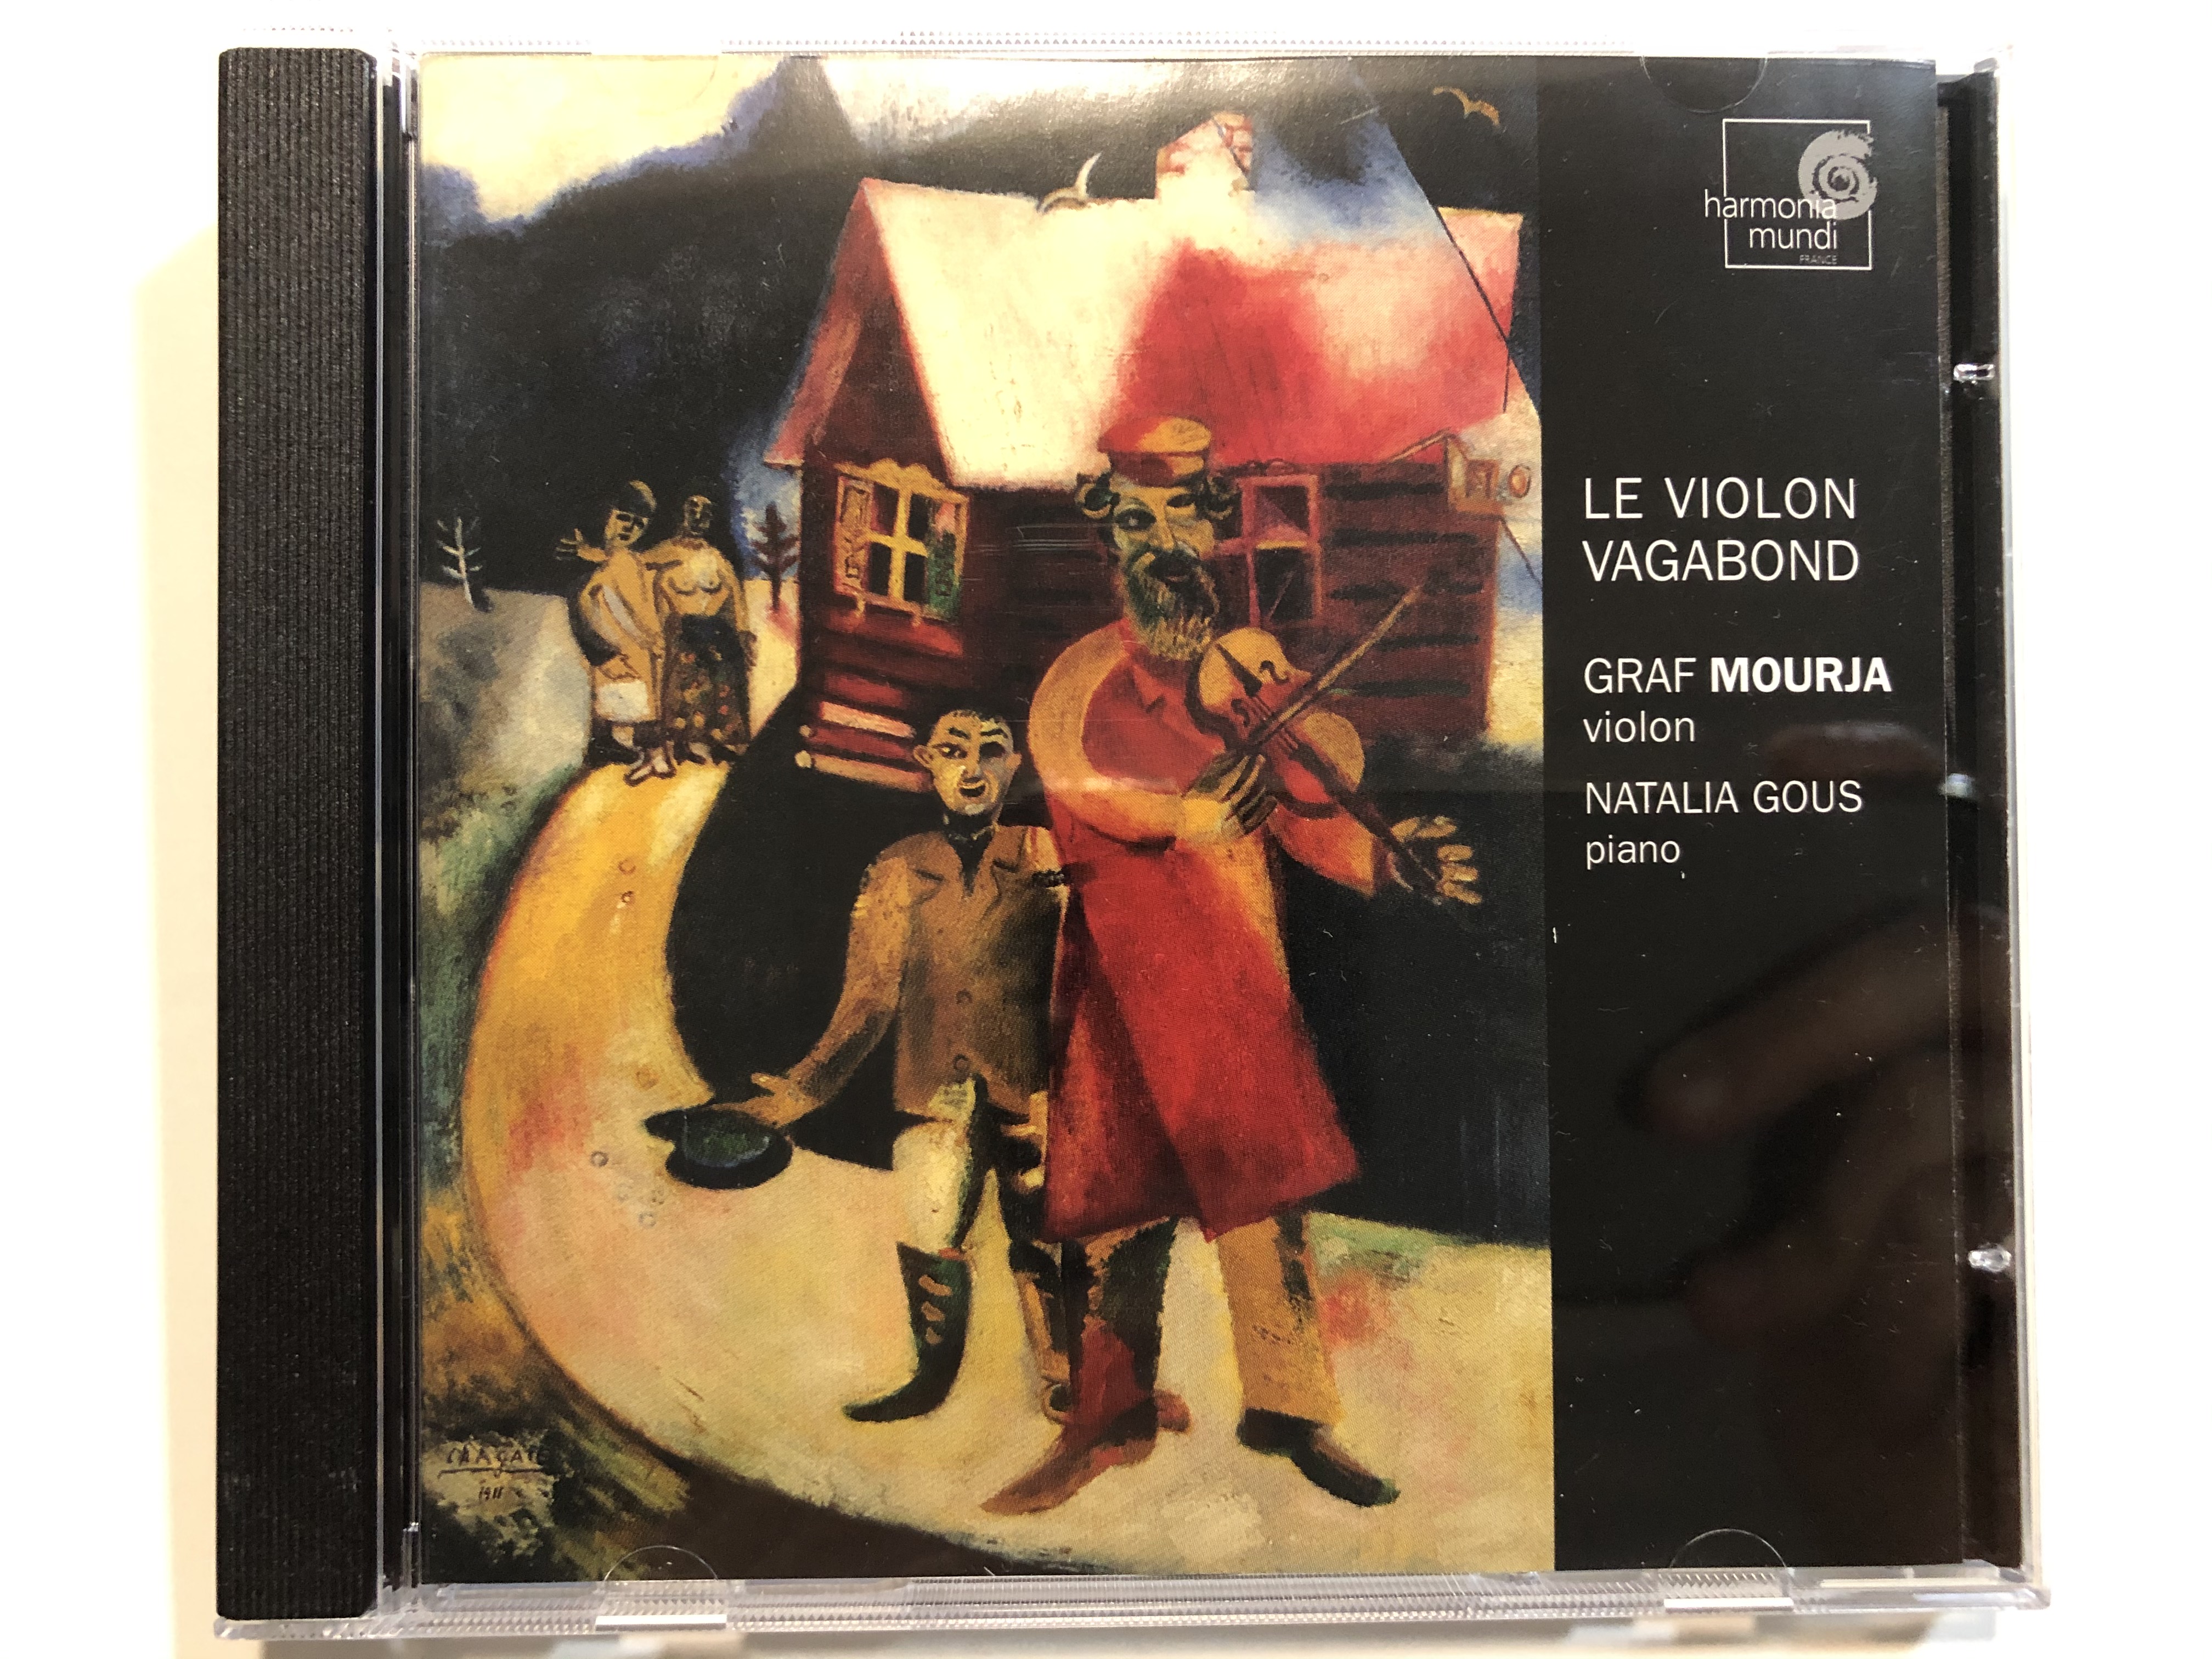 le-violon-vagabond-graf-mourja-violin-natalia-gous-piano-harmonia-mundi-s.a.-audio-cd-2004-hmc-901785-1-.jpg